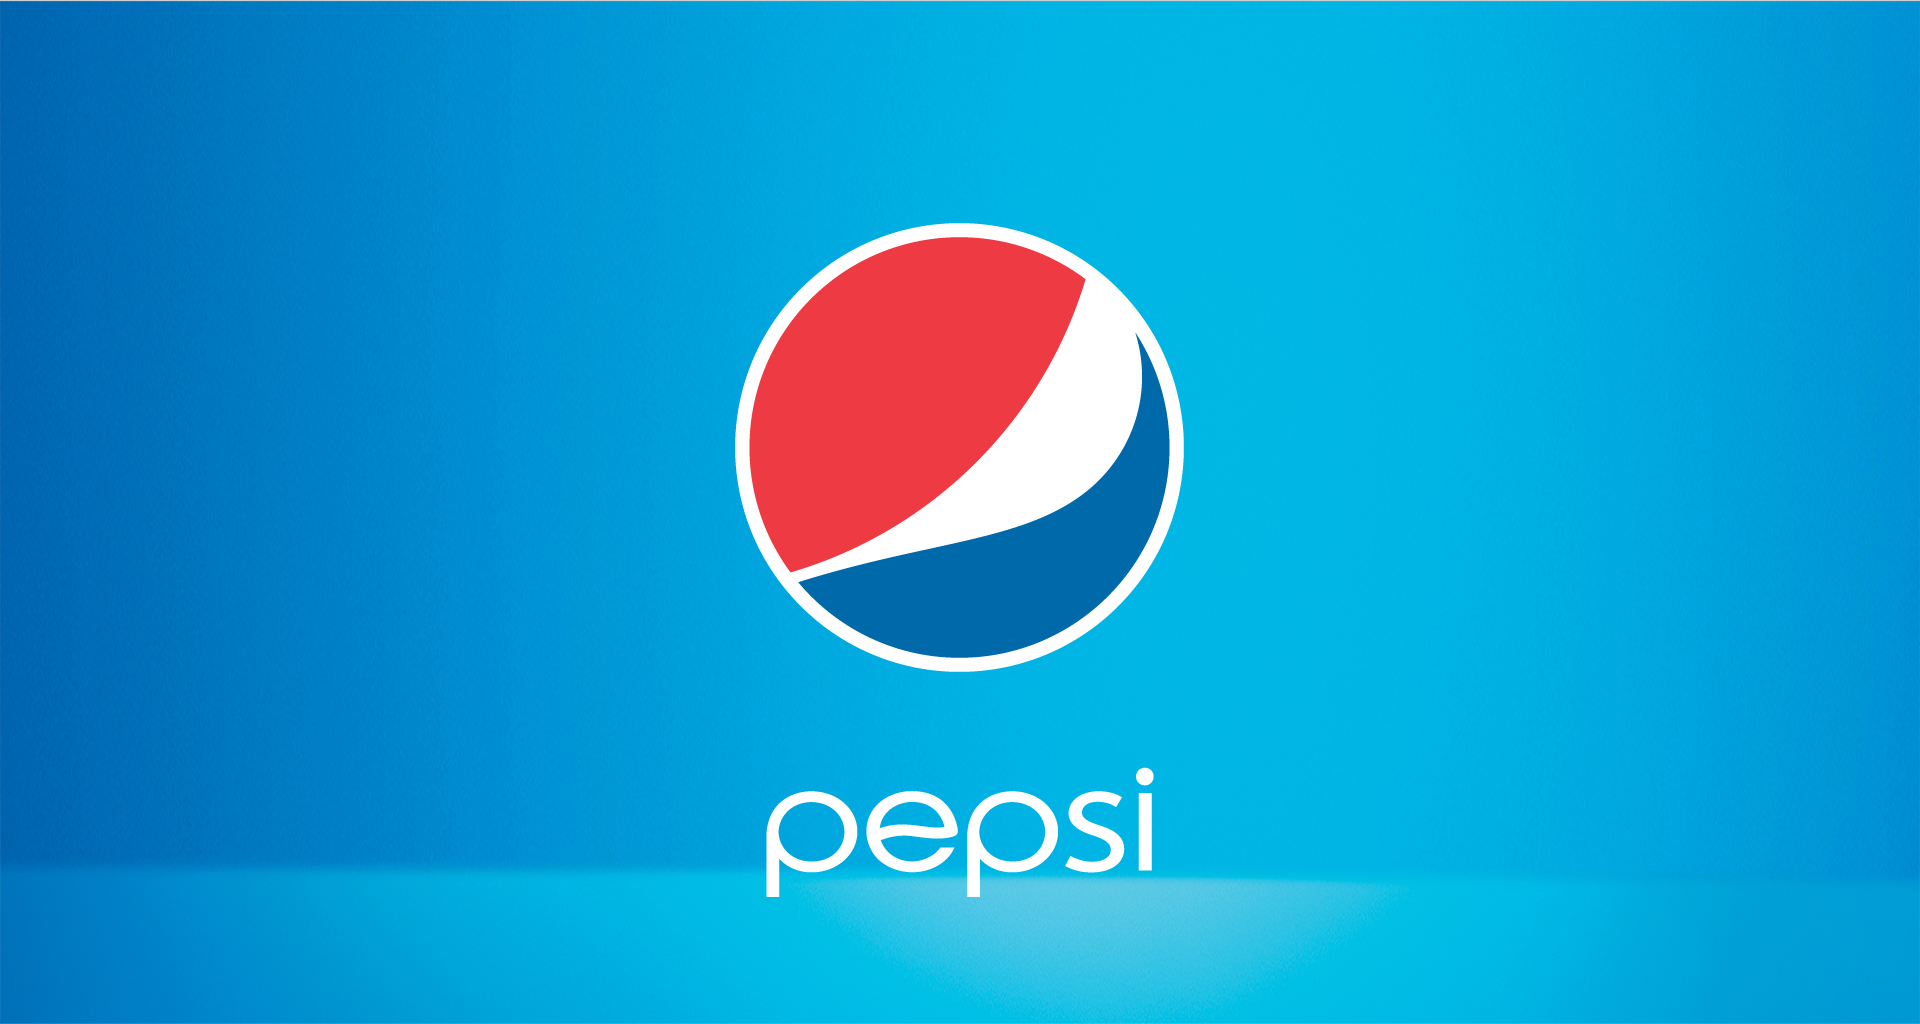 Pepsi Logo Wallpaper Photo Sharing